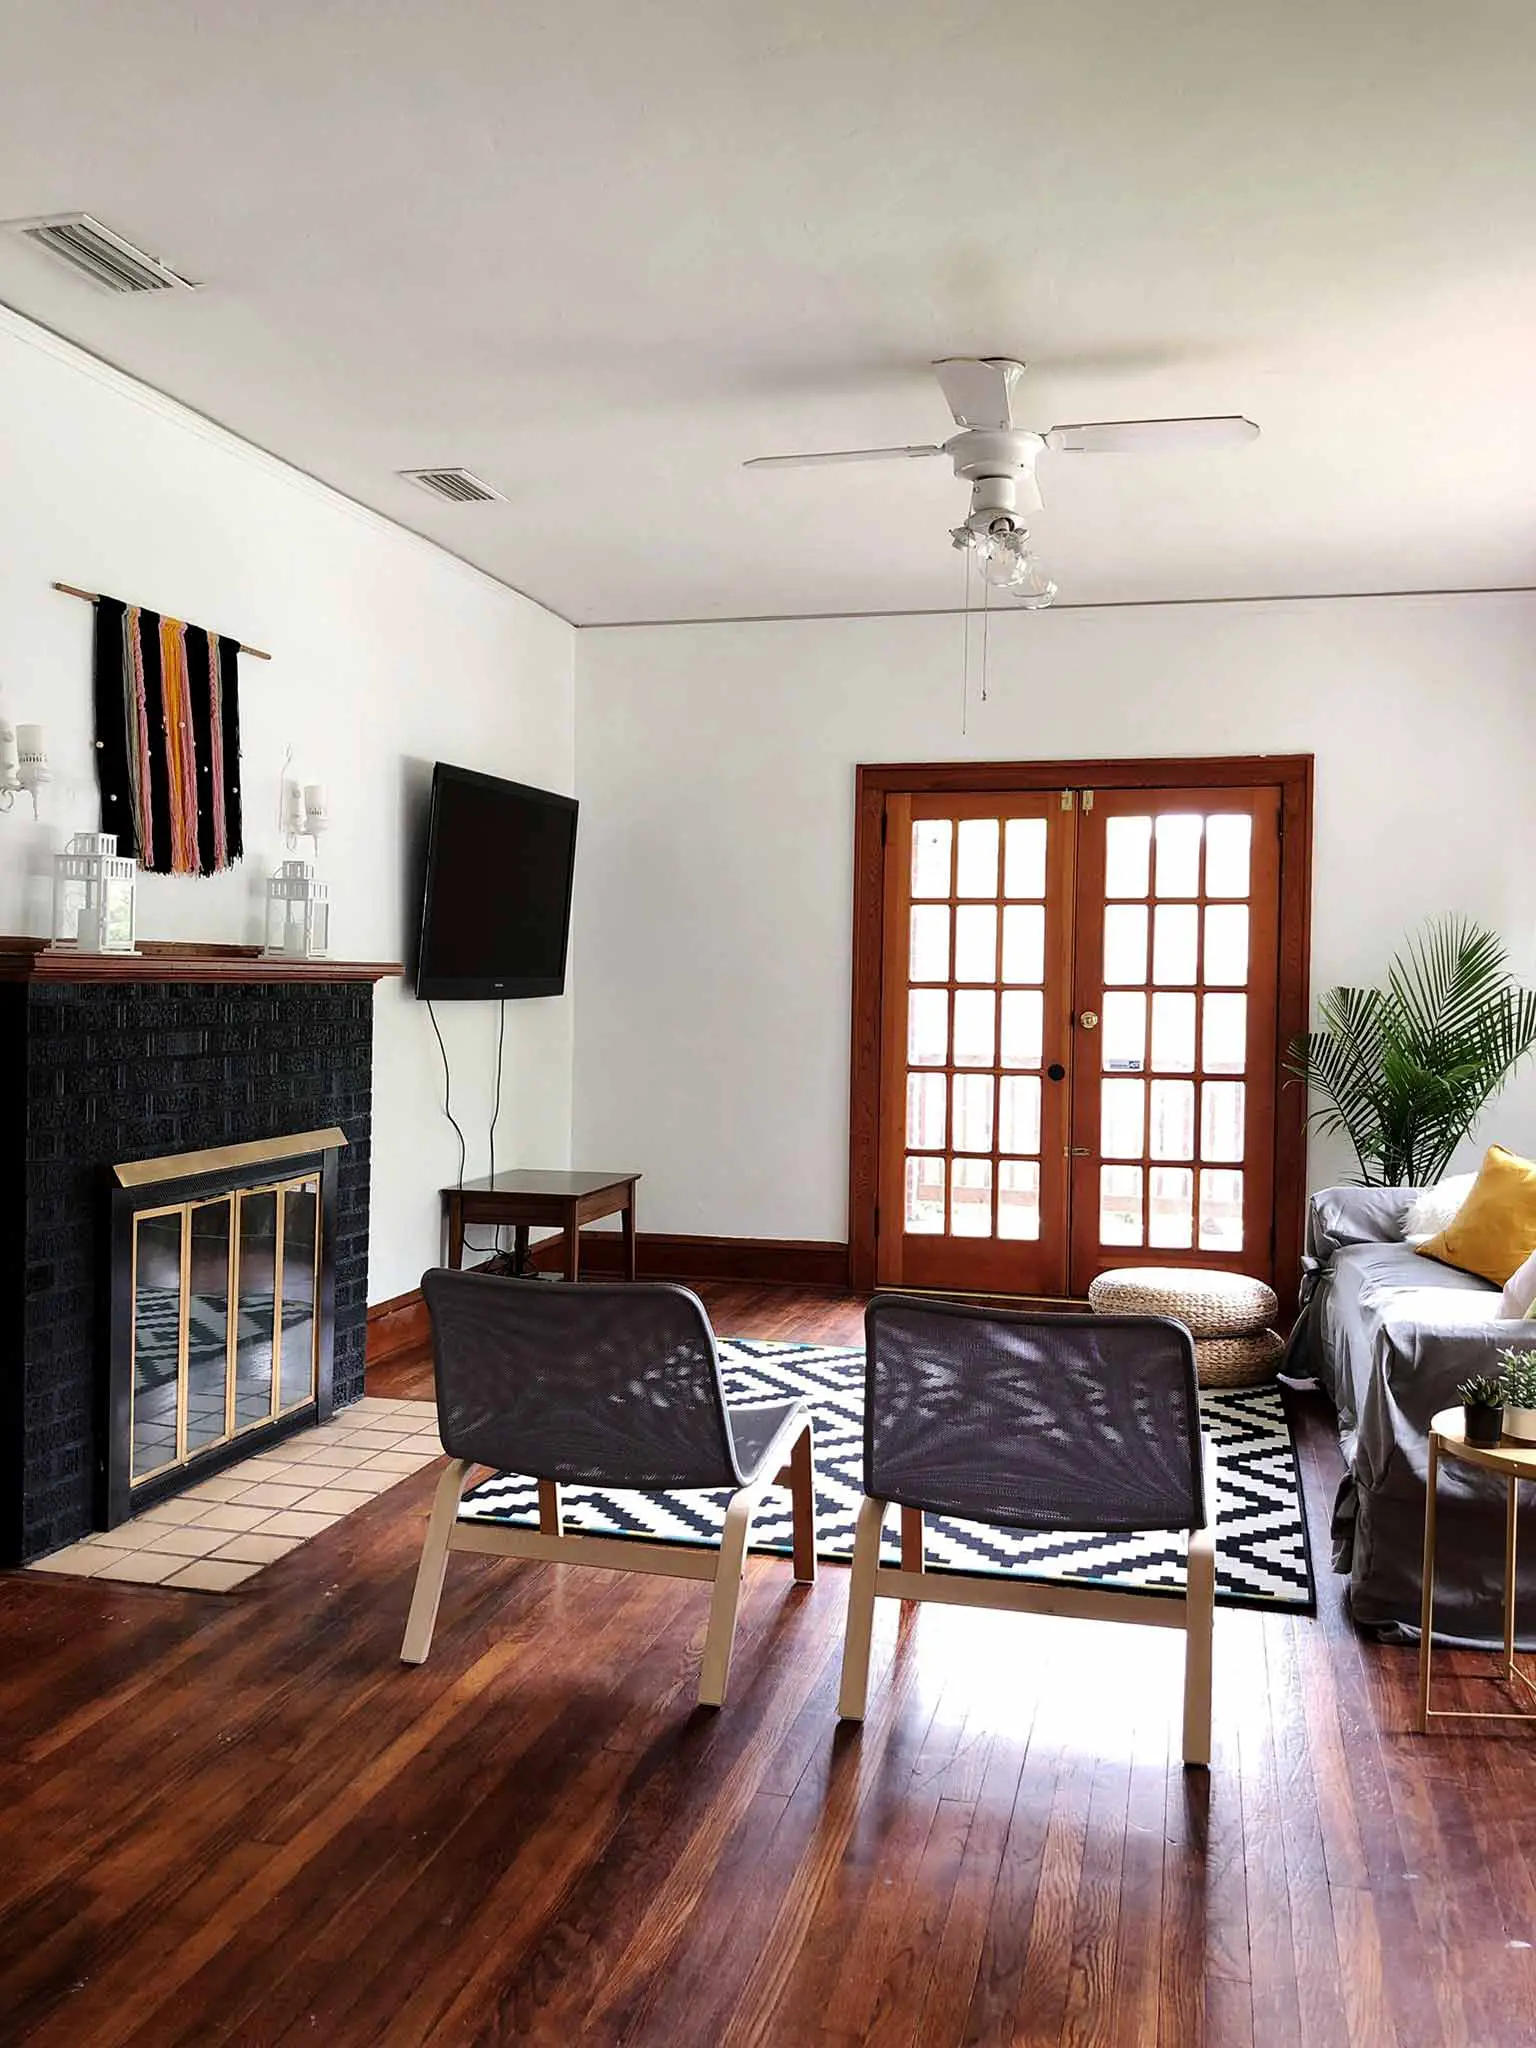 feelandhold: Minimalist Home Decor Living Room